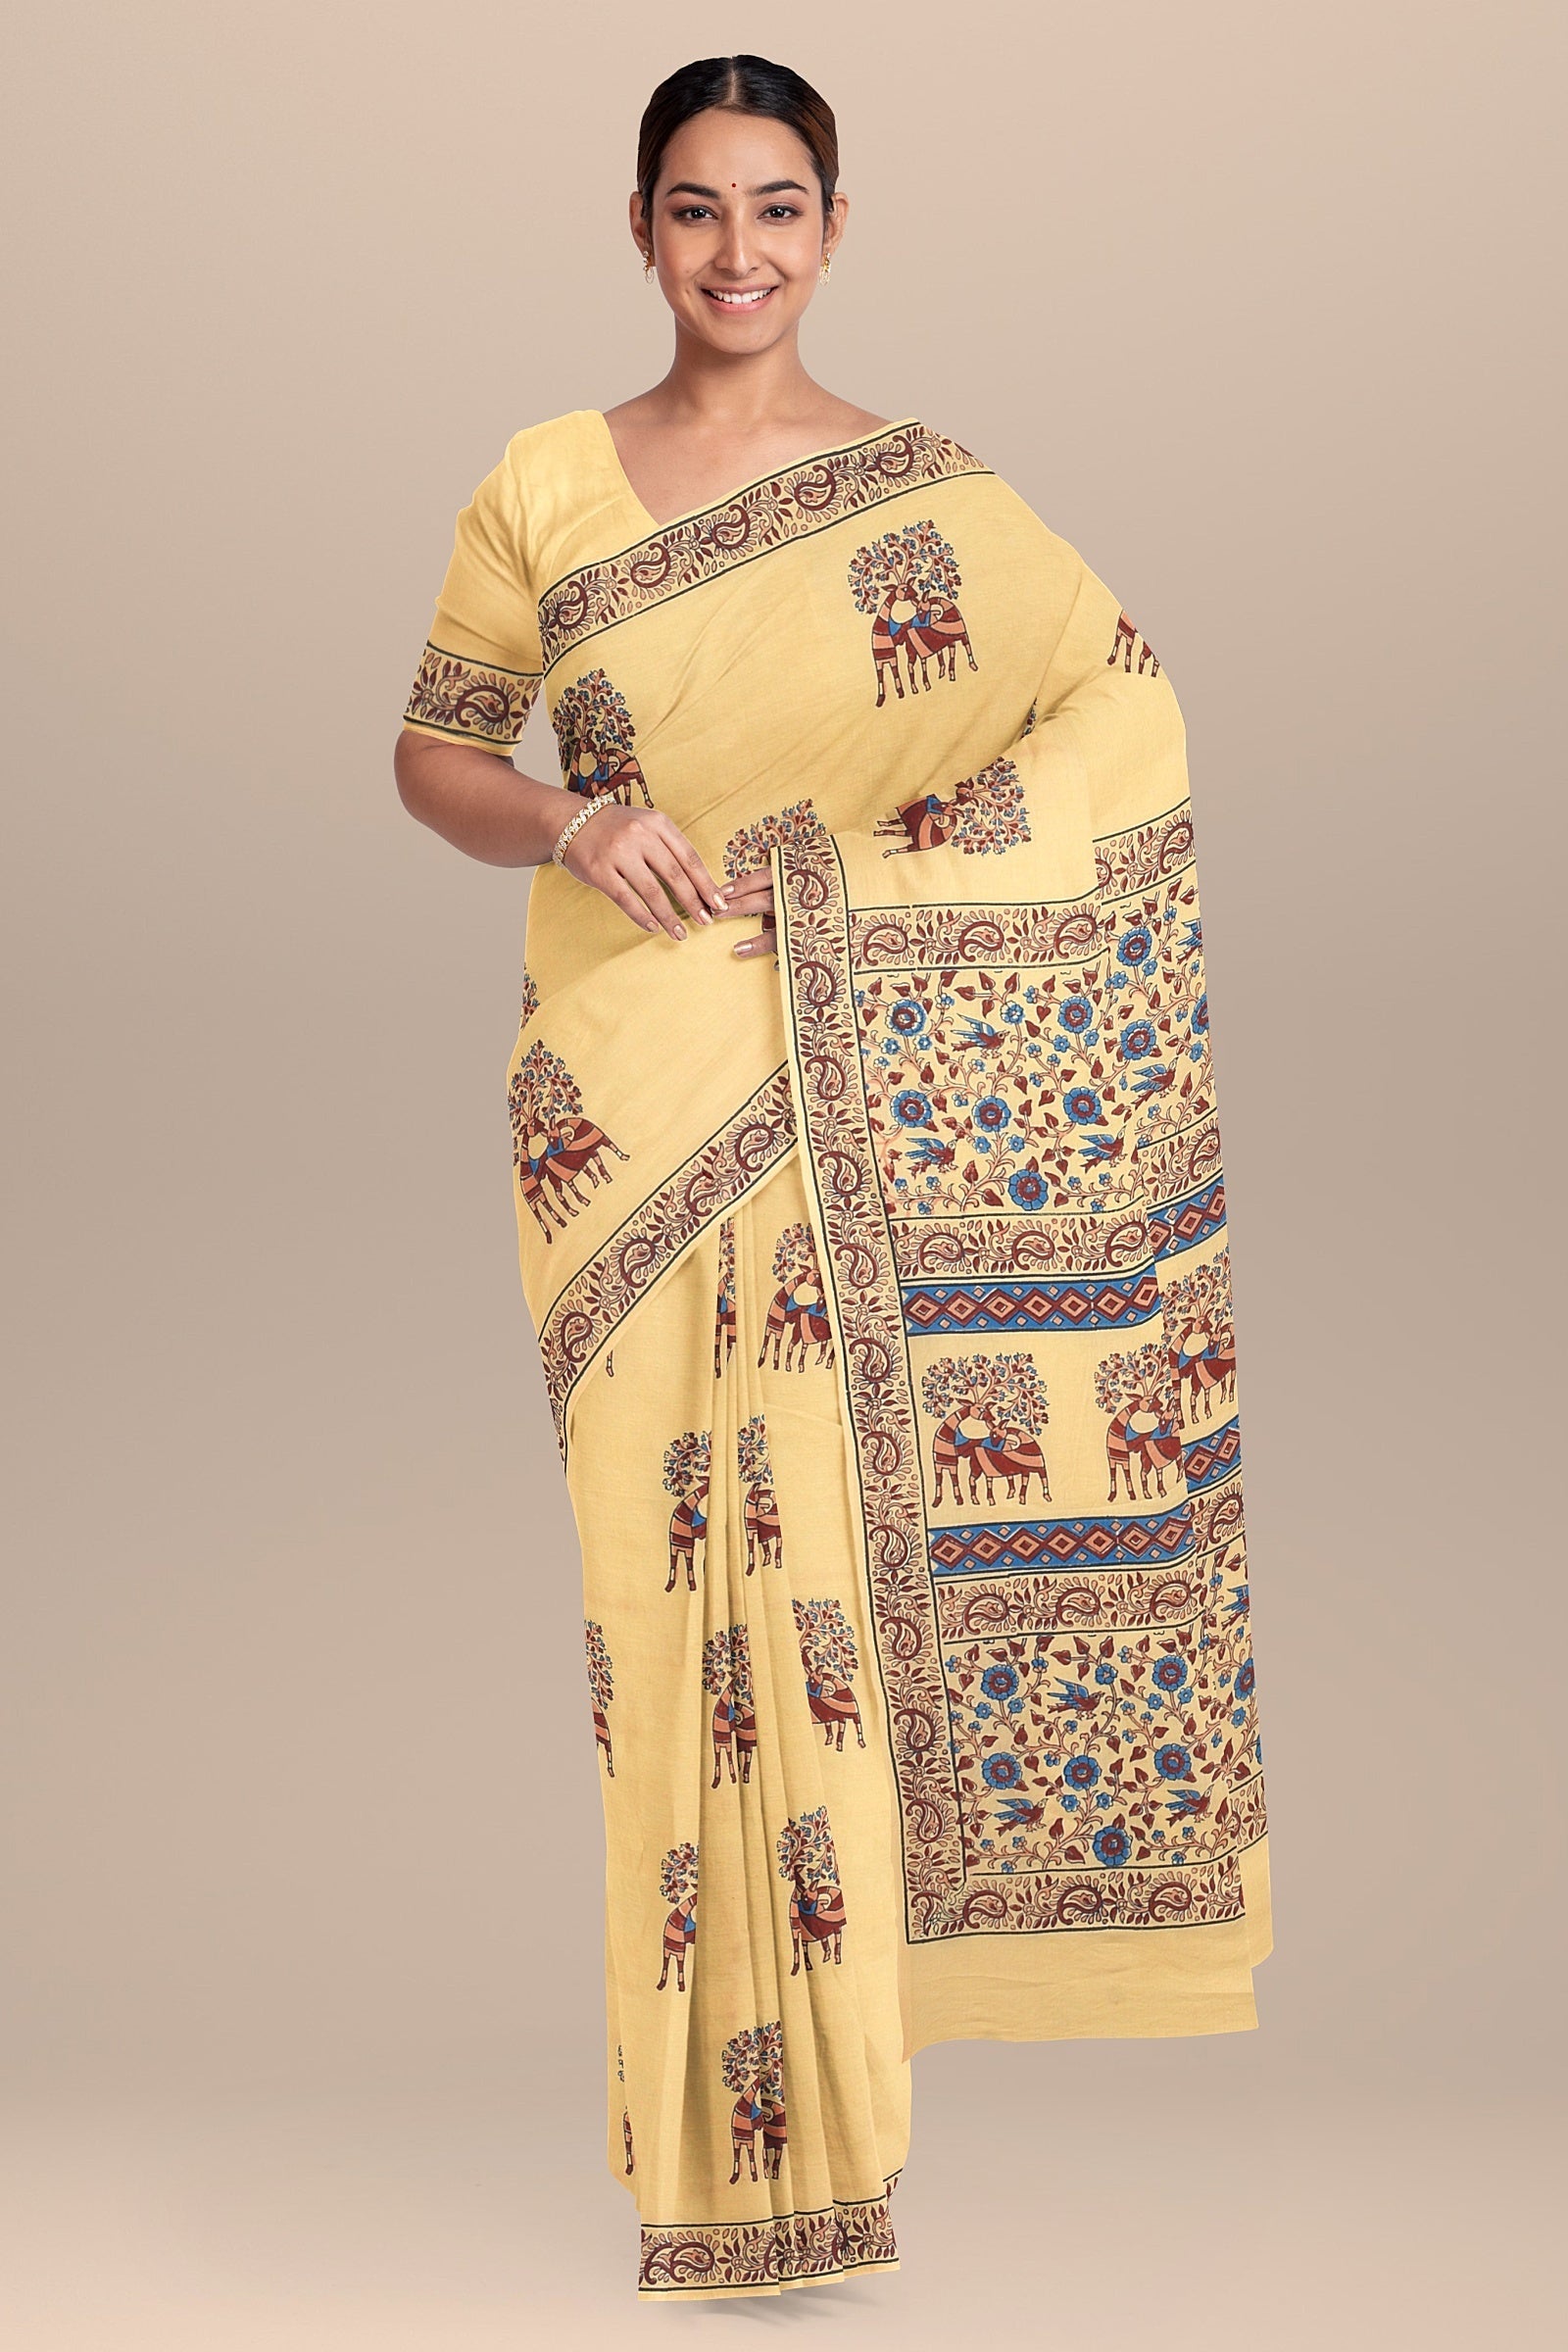 Chhipa Hand Block Printed Mustard Yellow Color Malmal Cotton Saree With Multicolor Deer Motif SKU-7004 - Bhartiya Shilp